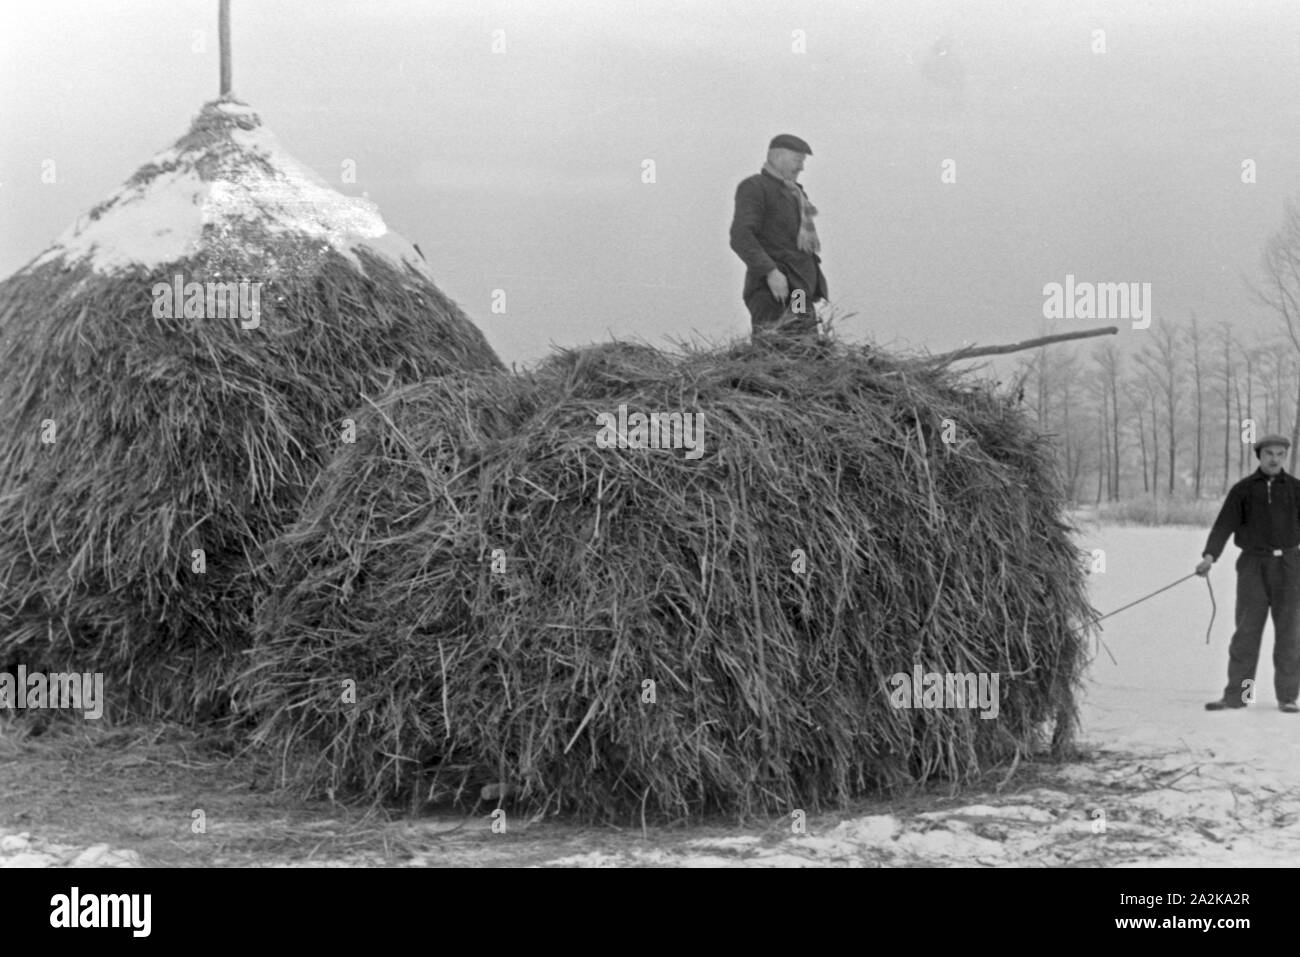 Zwei Männer stapeln Winterheu aus dem Spreewald, Deutschland 1930er Jahre. Two man piling winter hay from a Spreewald forest, Germany 1930s. Stock Photo